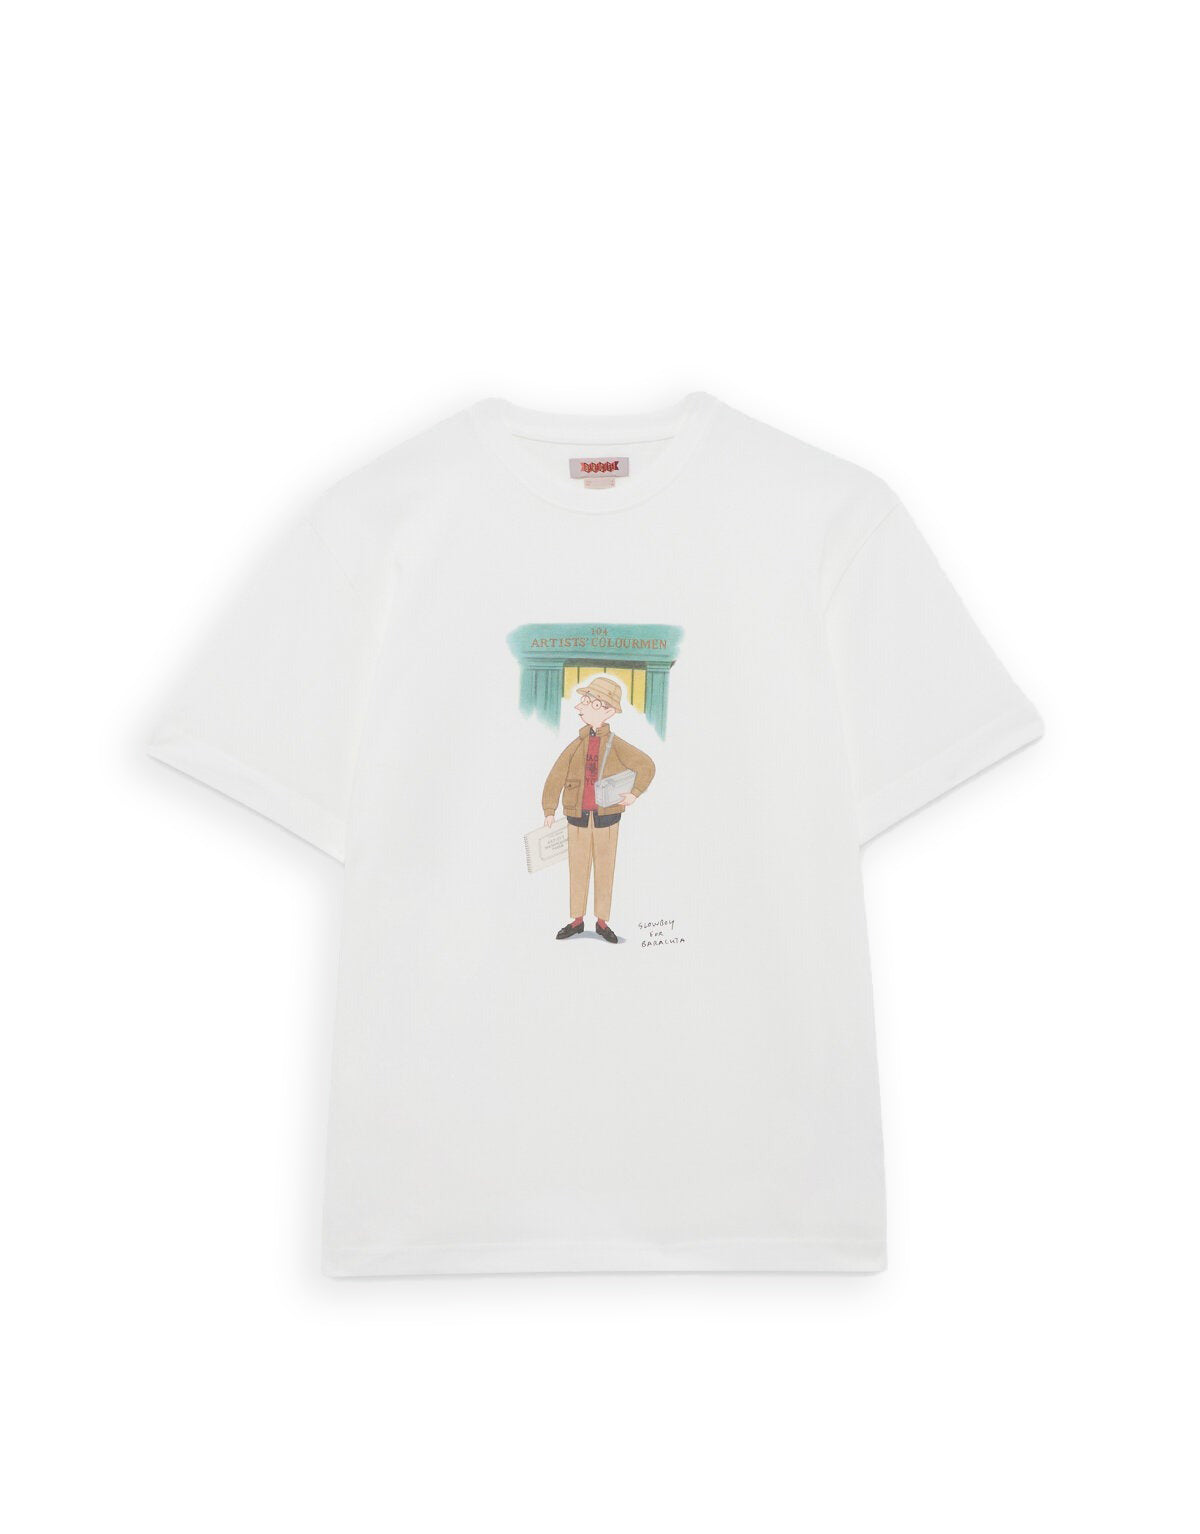 Colourman Slowboy T-Shirt